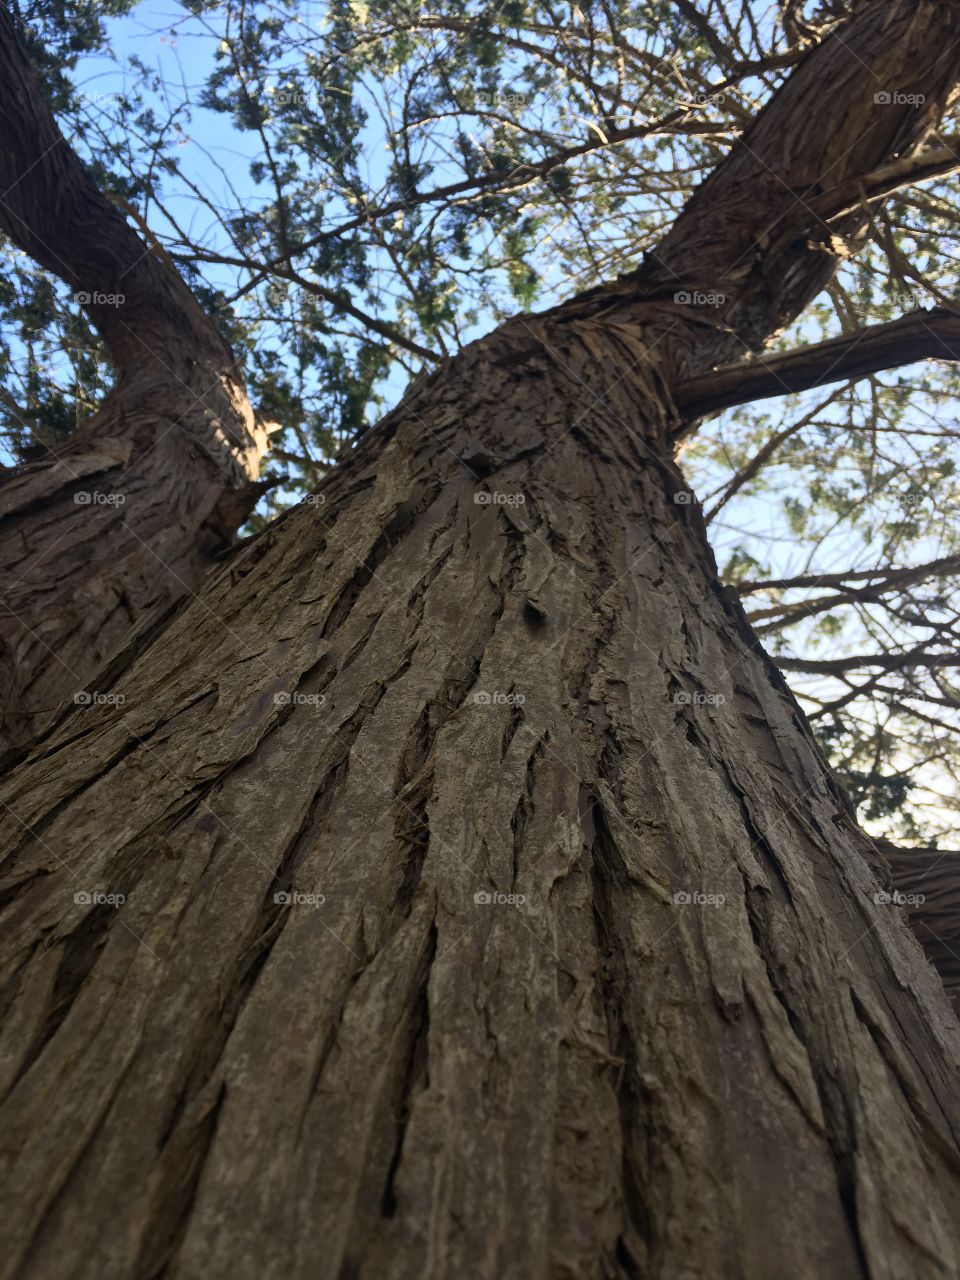 Bark view of tree